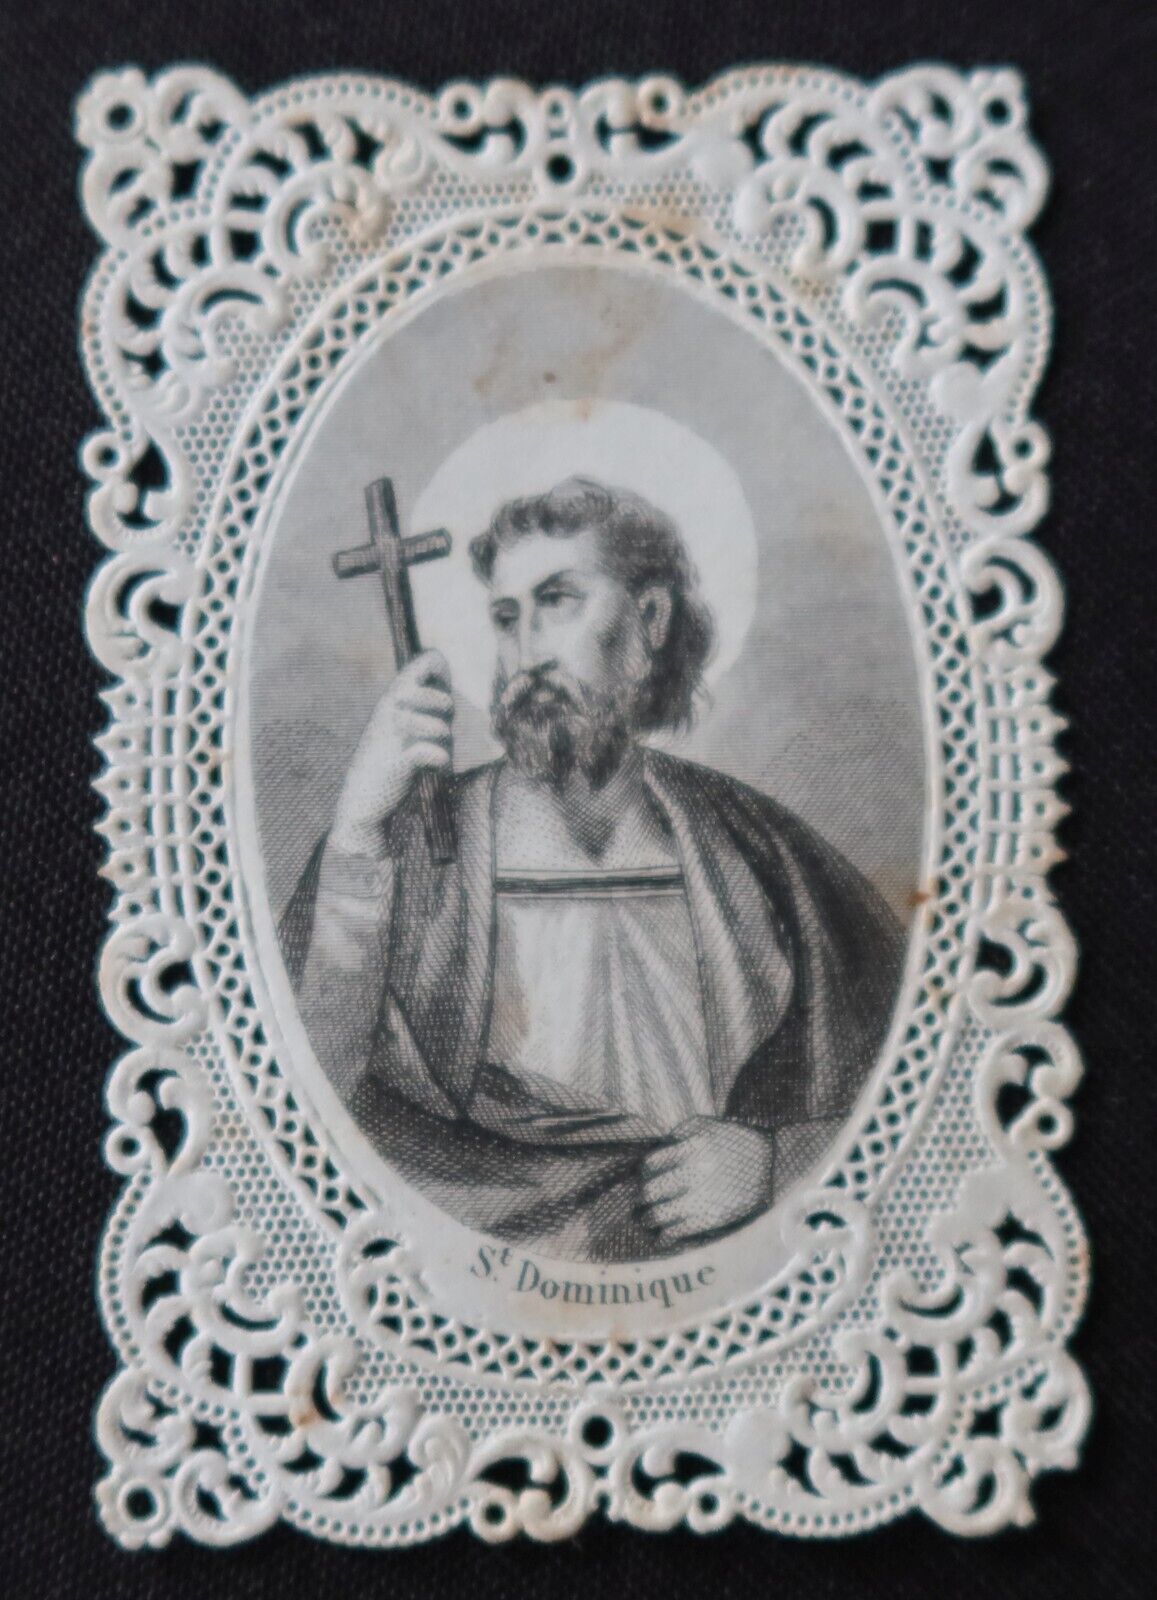 HERNOUD Canivet 19th SAINT DOMINIQUE image pieuse holy card devotional picture 20